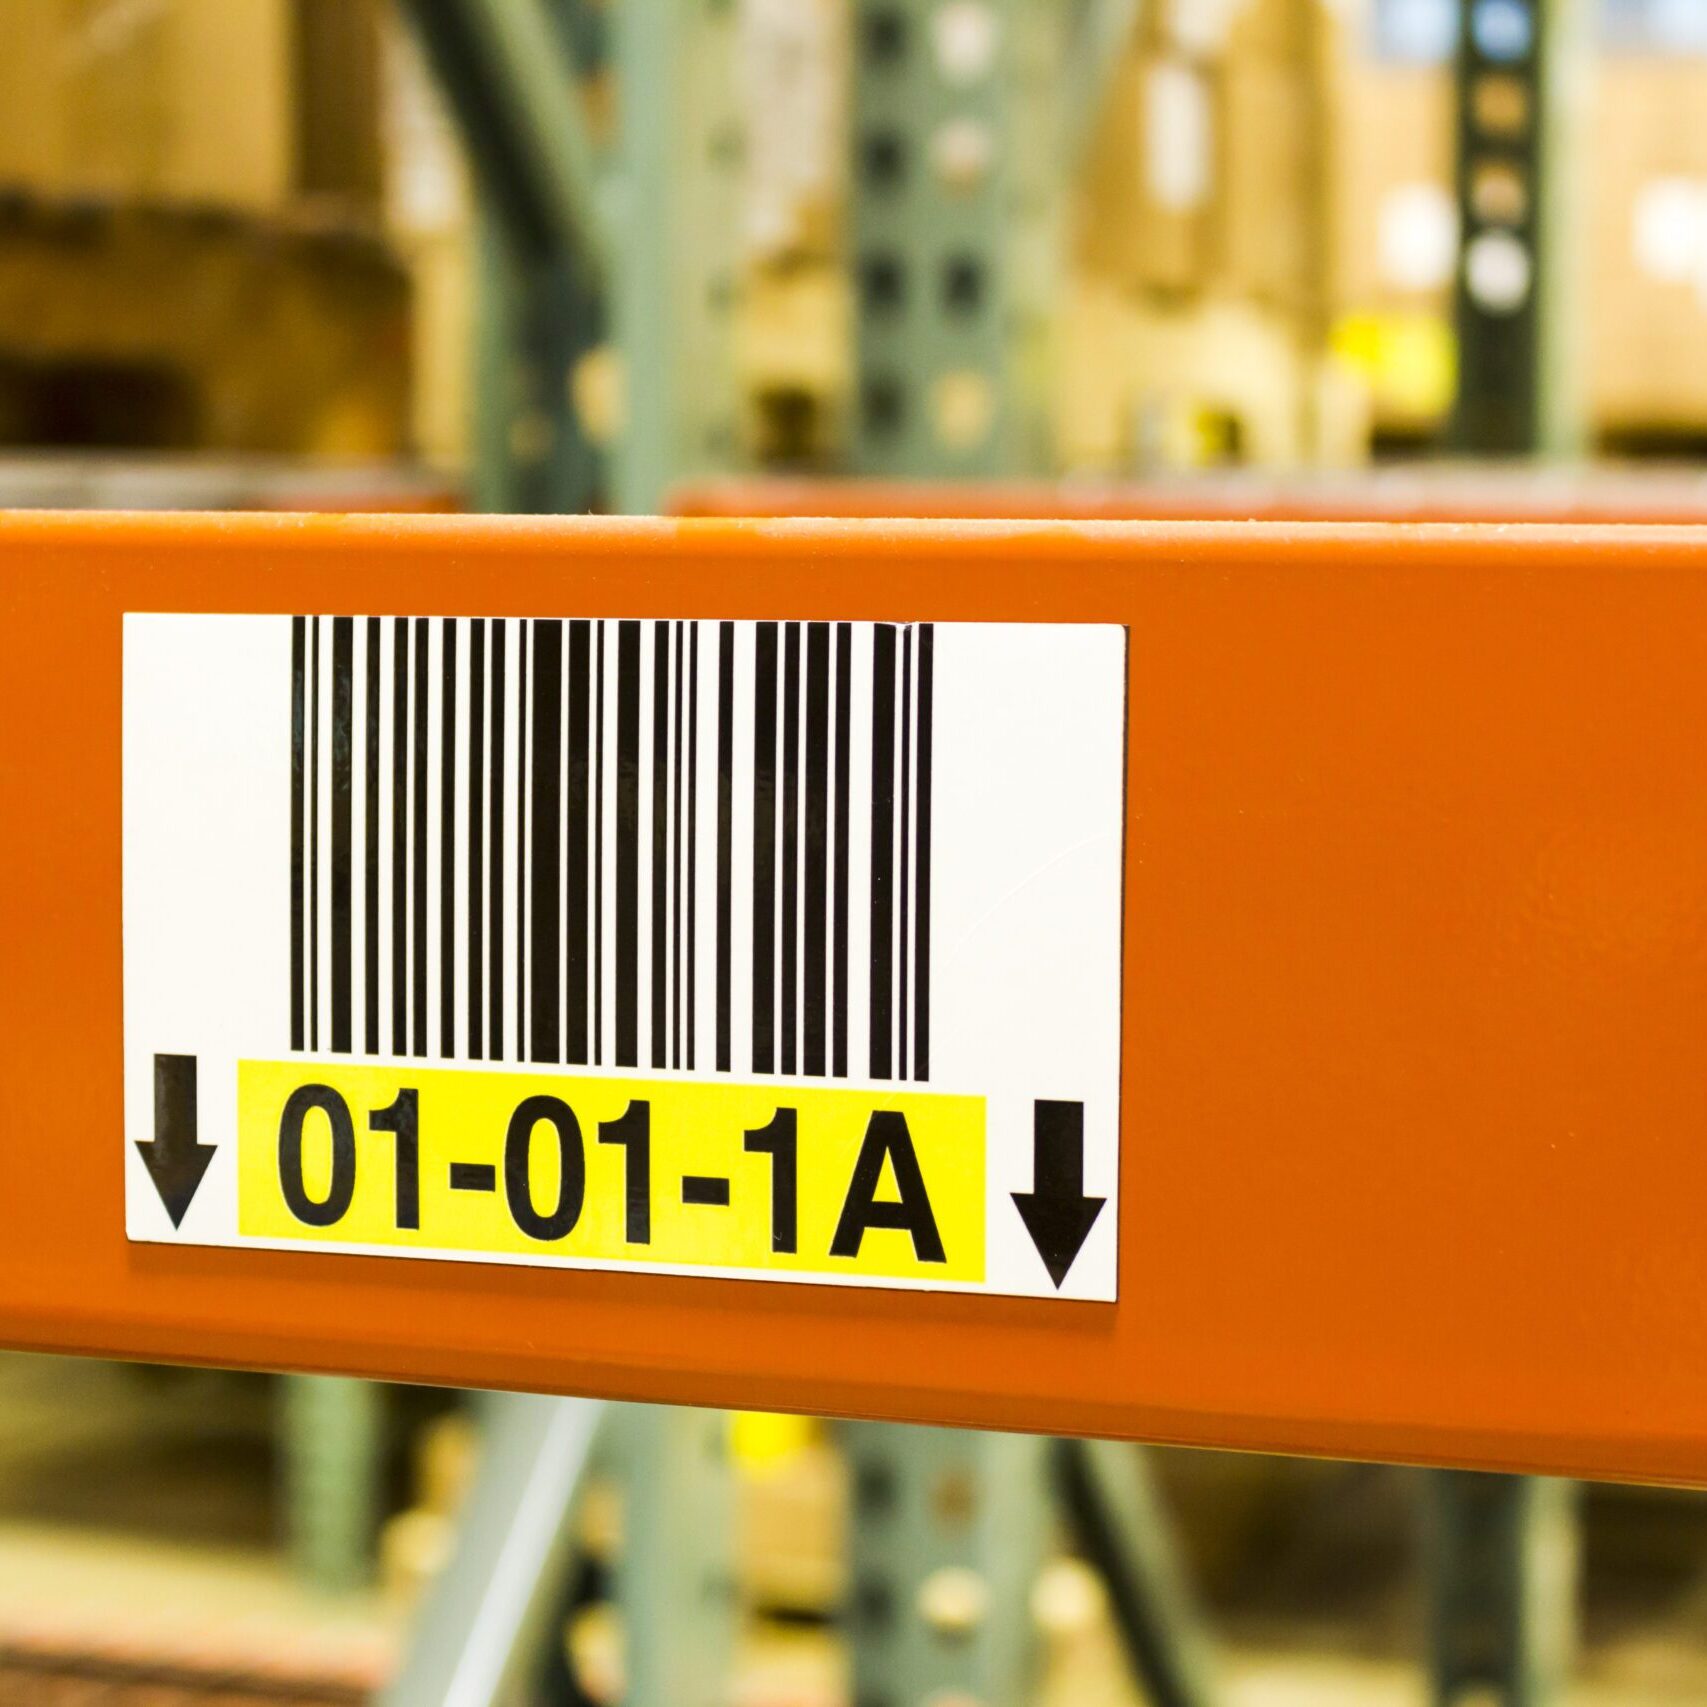 Warehouse-rack-labels-symbols-paladinid